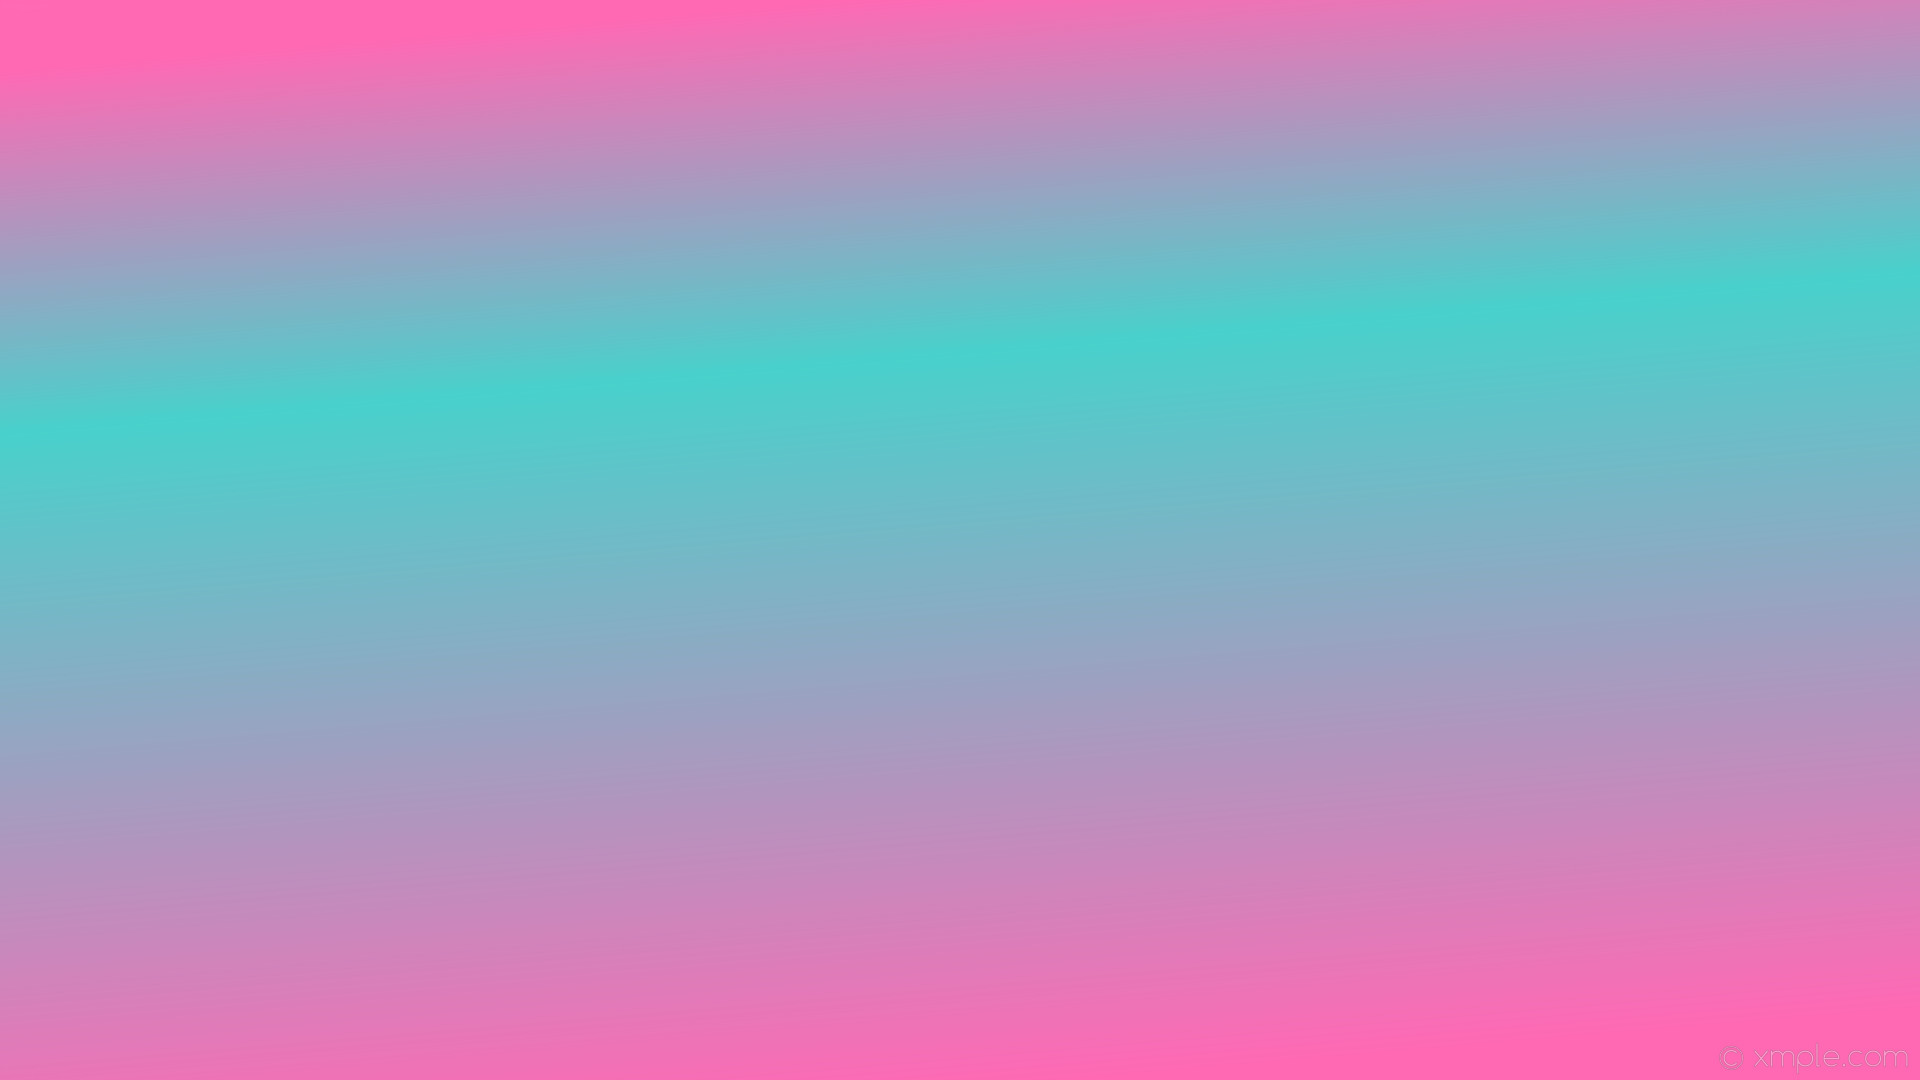 1920x1080 wallpaper highlight linear gradient blue pink hot pink medium turquoise  #ff69b4 #48d1cc 285Â°